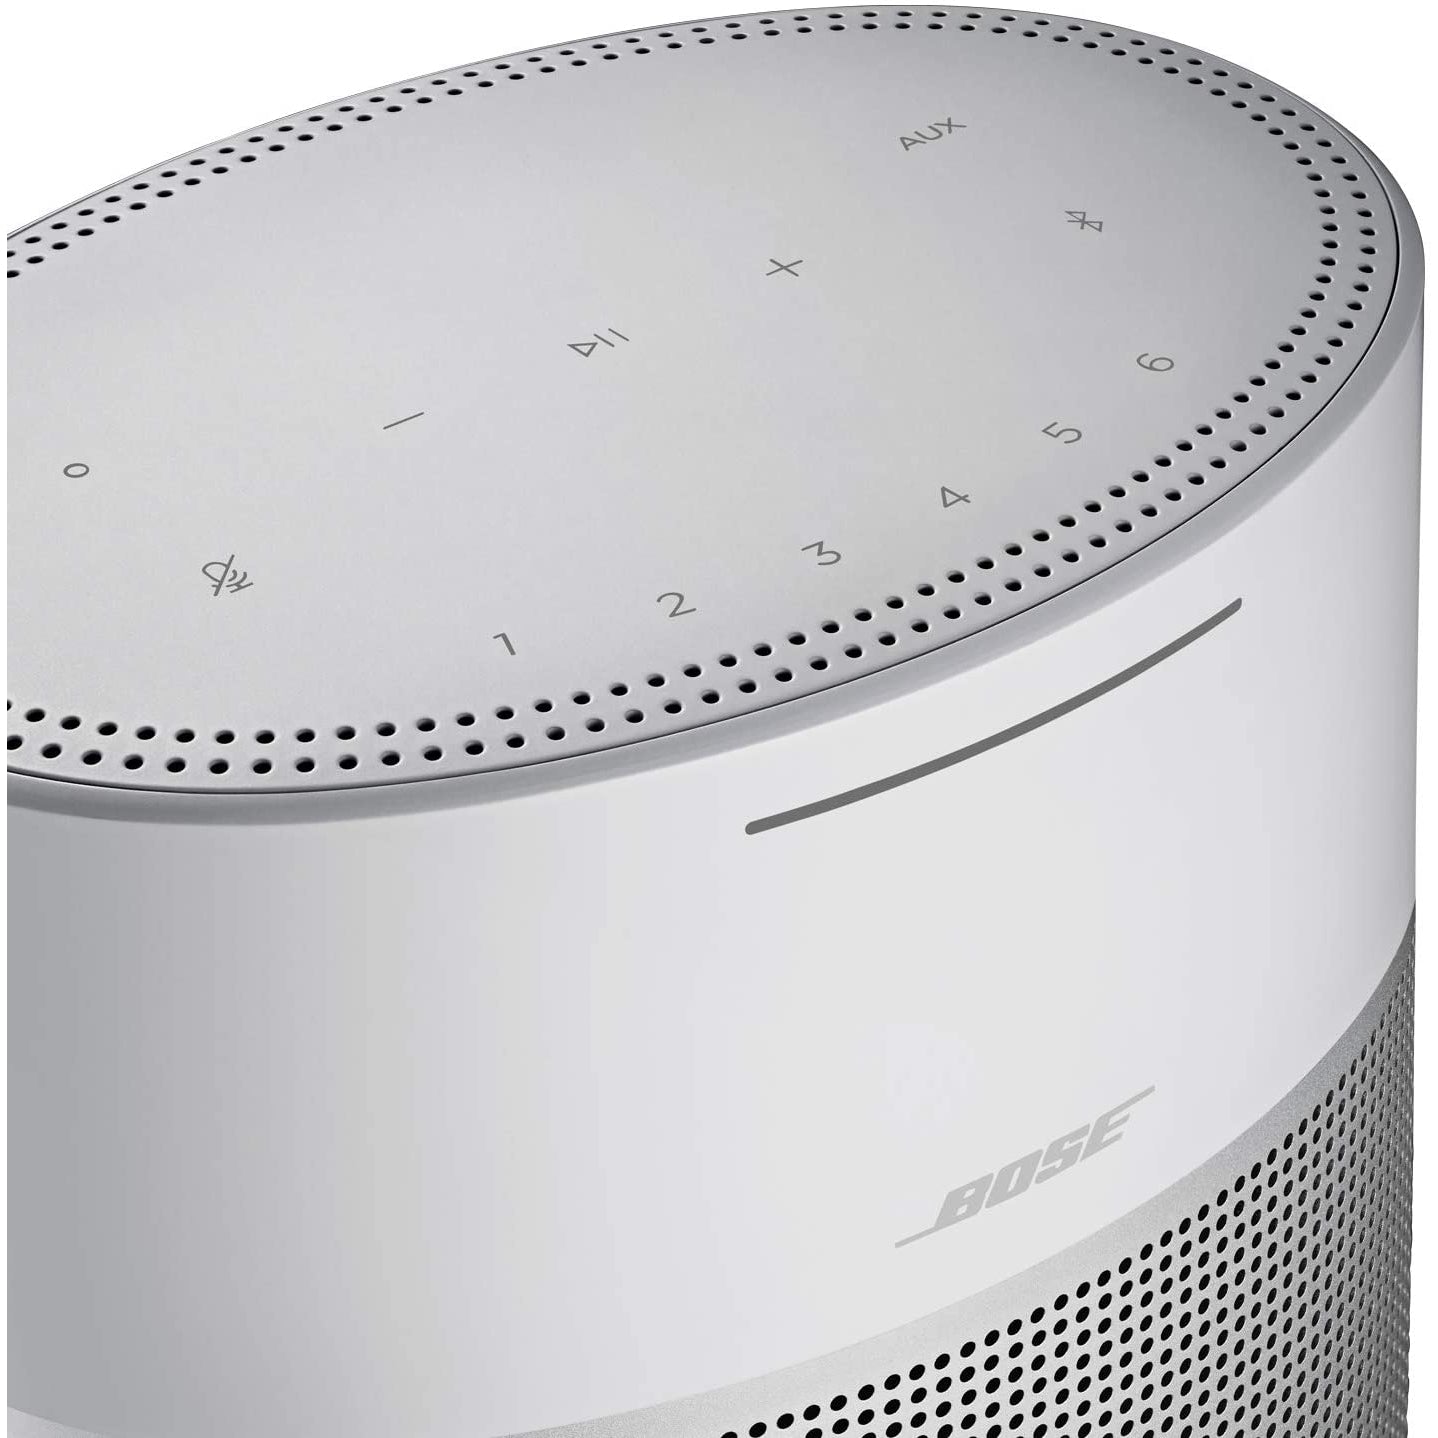 Bose Home Smart Speaker 300 - Silver - Refurbished Pristine